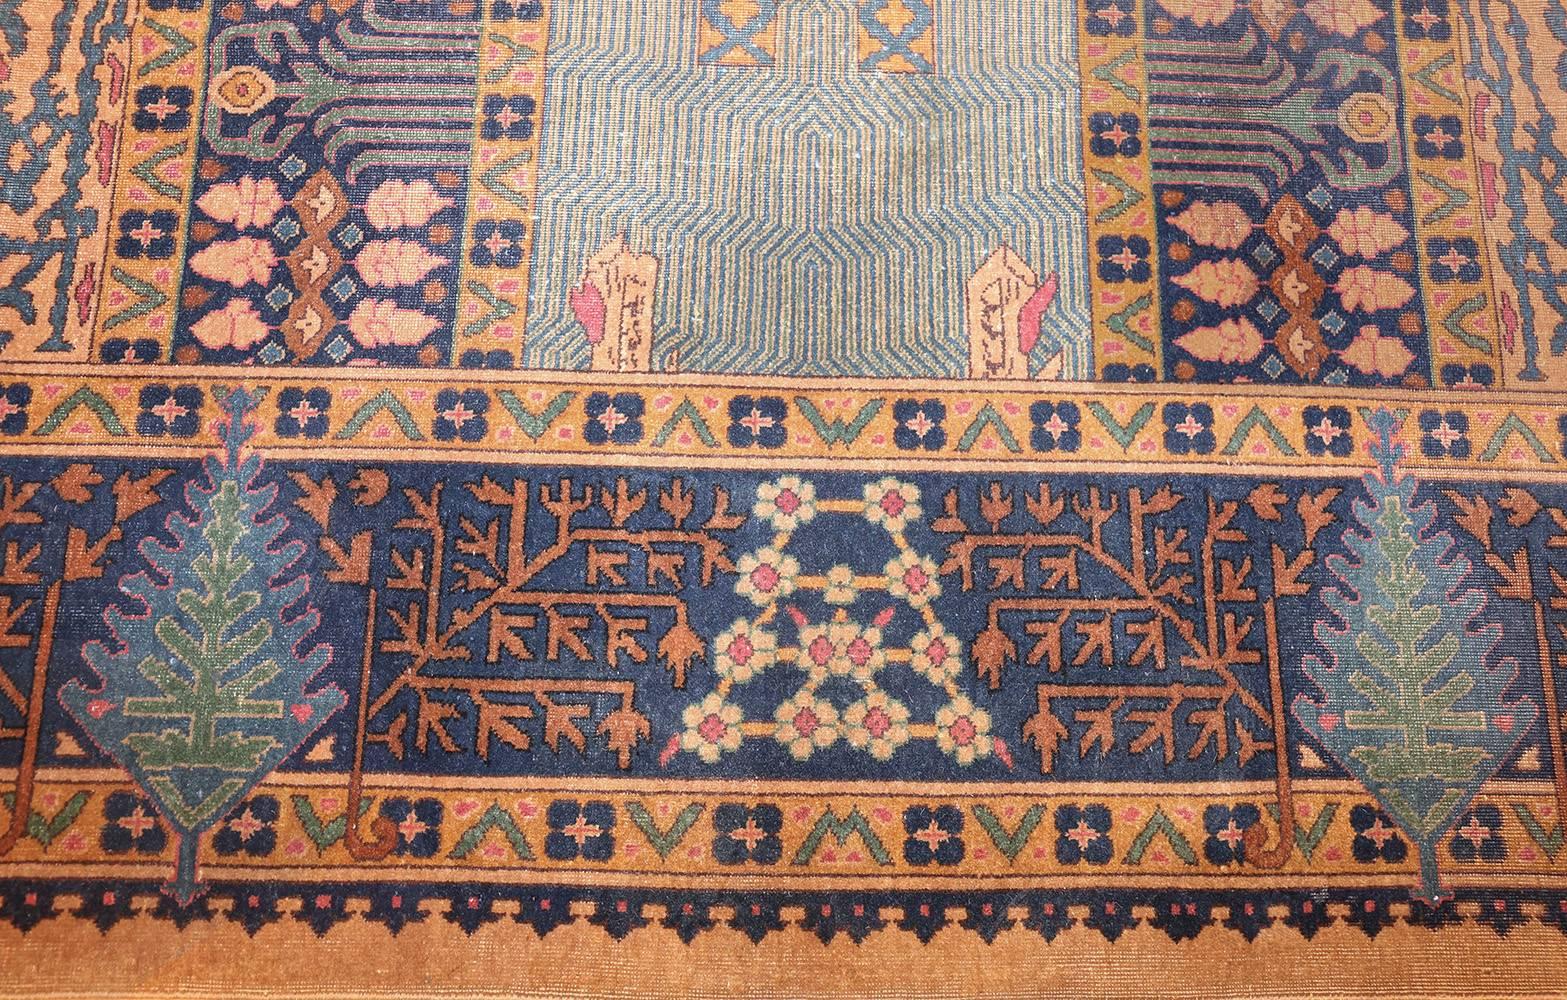 20th Century Room-Sized Antique Indian Carpet